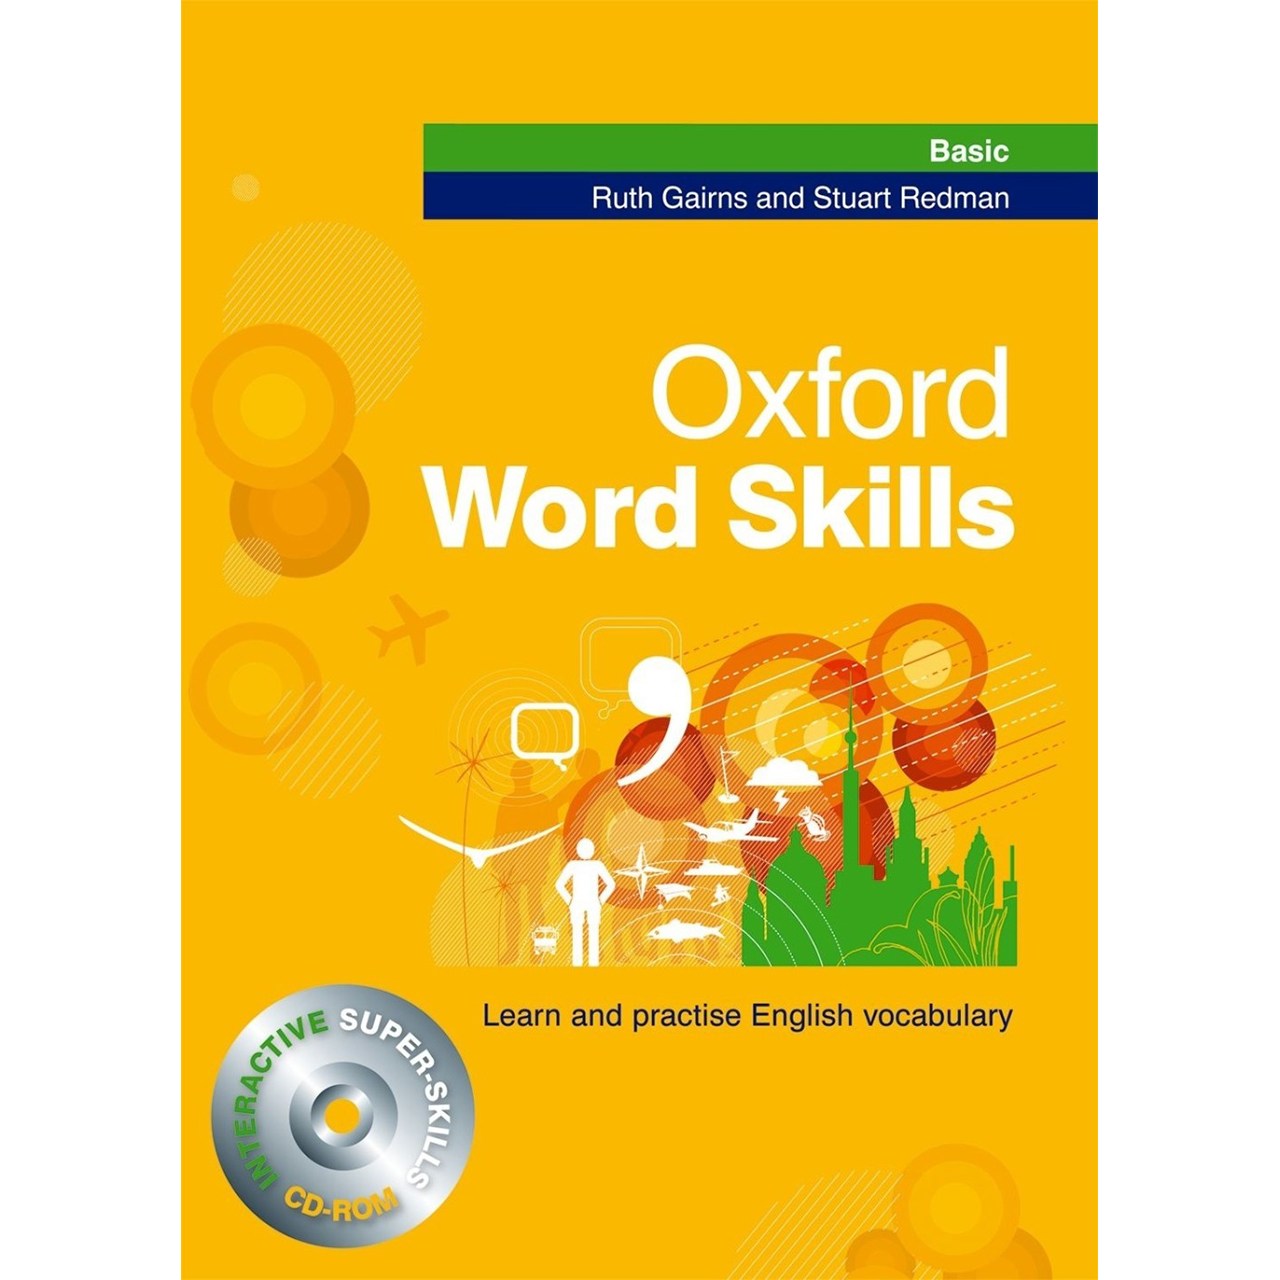 کتاب زبان Oxford Word skills Basic اثر Ruth Gairns